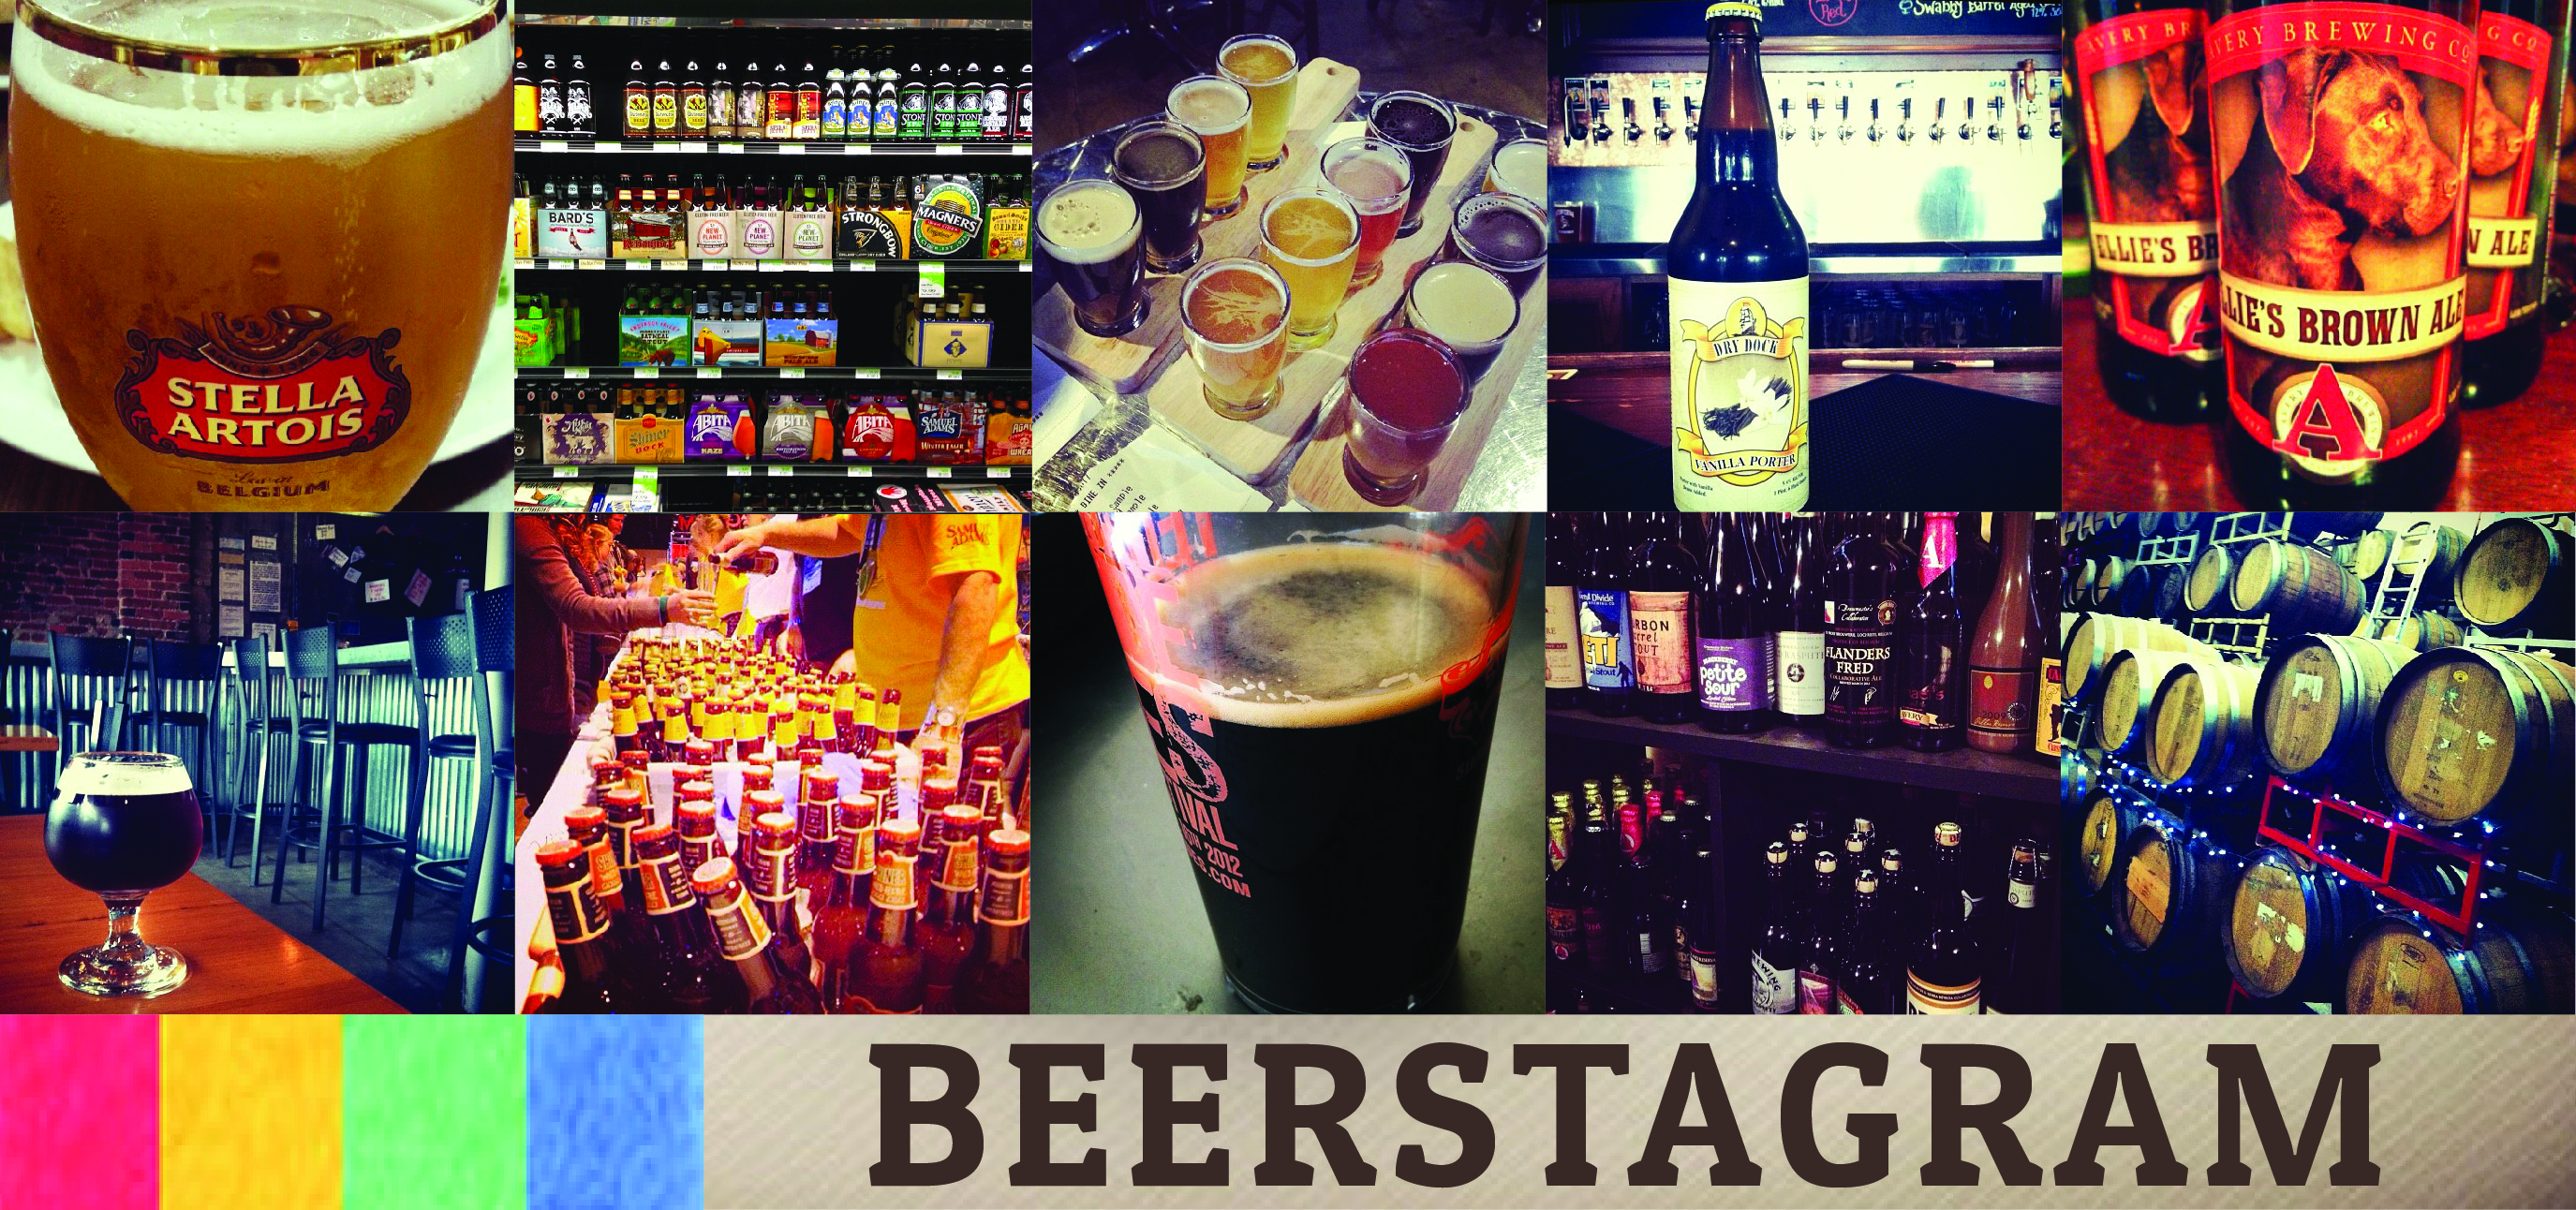 Beerstagrams 1/10-1/17